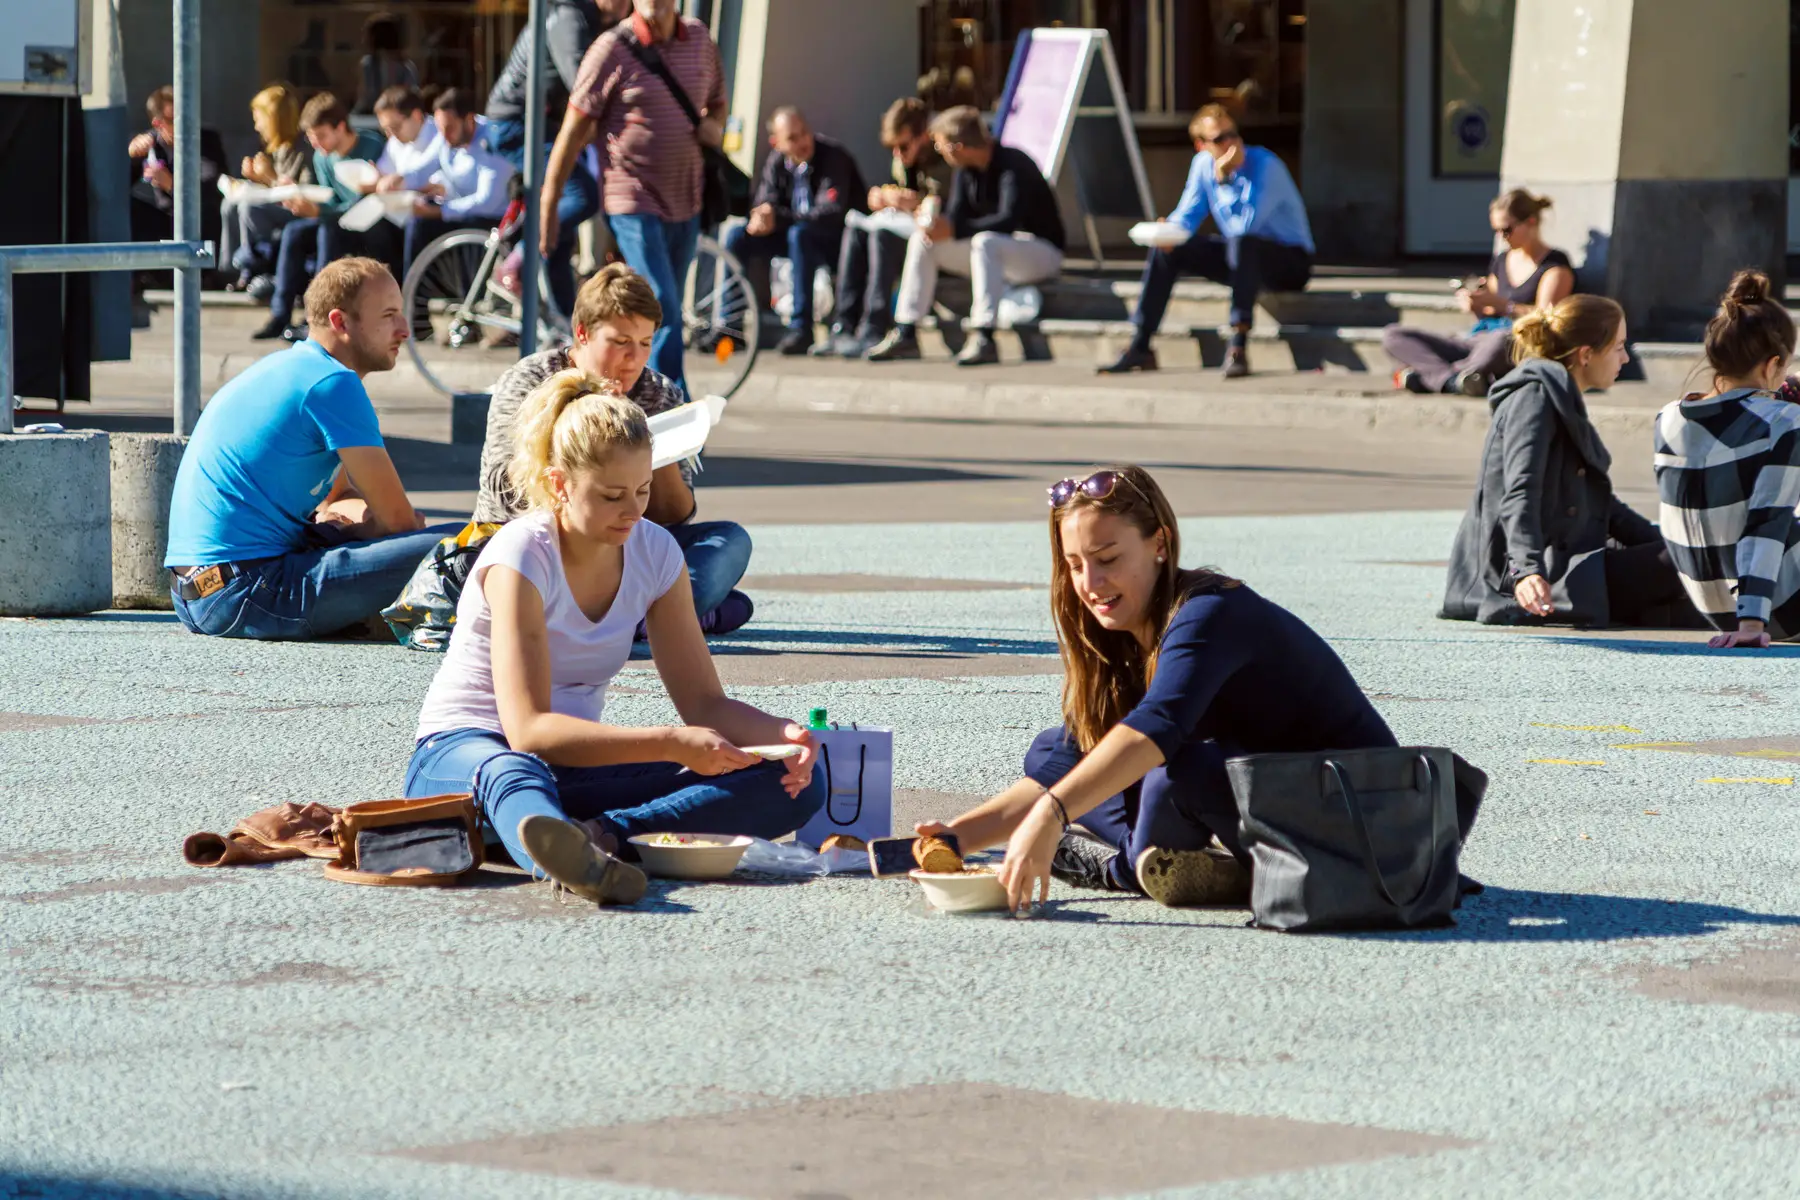 University students in Switzerland